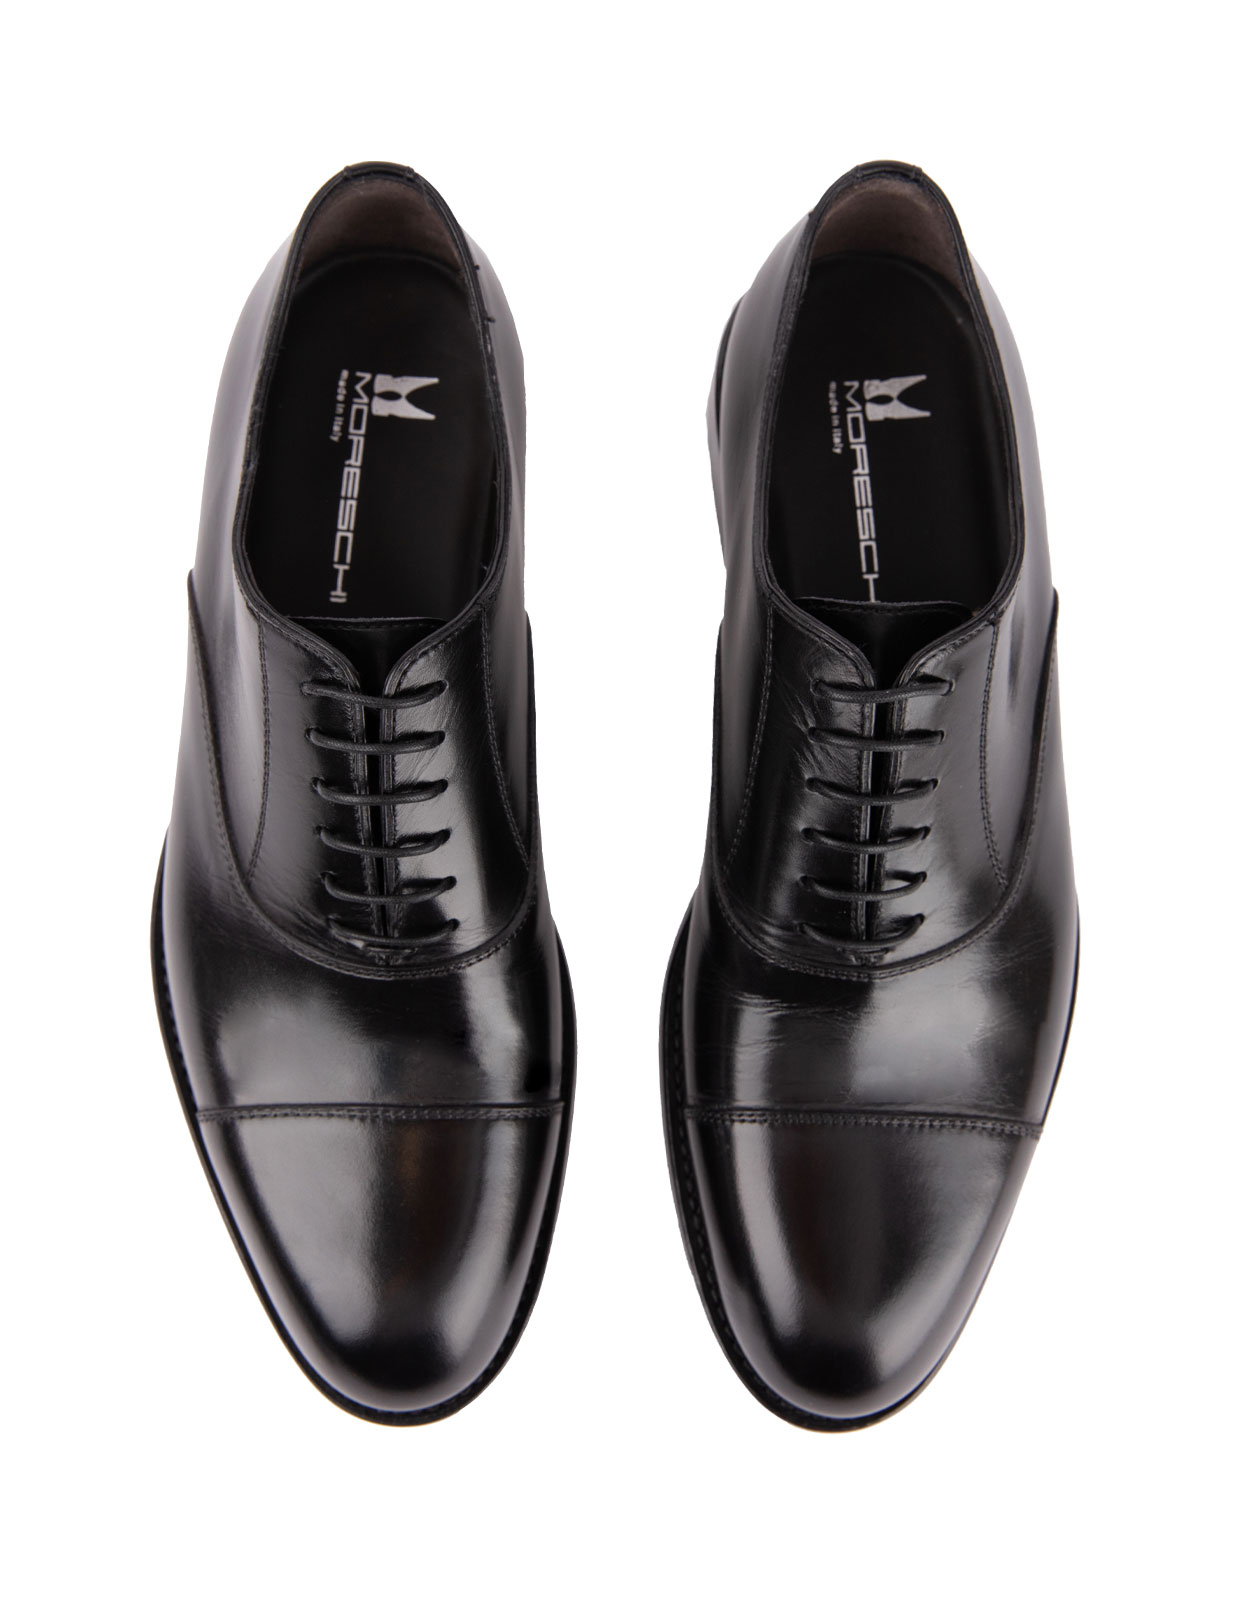 New York Oxford Shoes Calfskin Black Stl 9